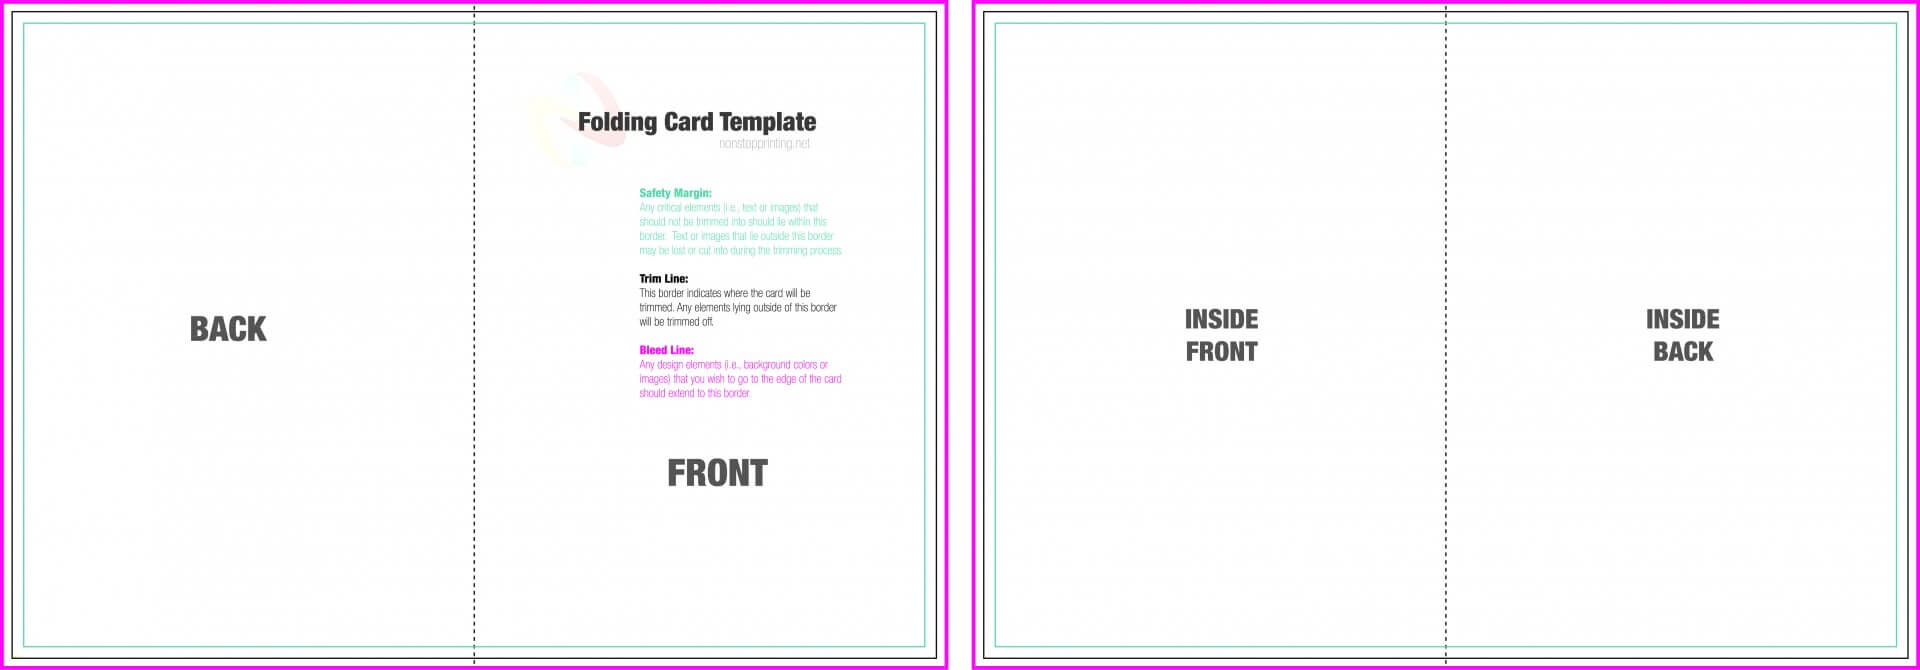 Unforgettable Blank Quarter Fold Card Template Free Ideas Throughout Blank Quarter Fold Card Template